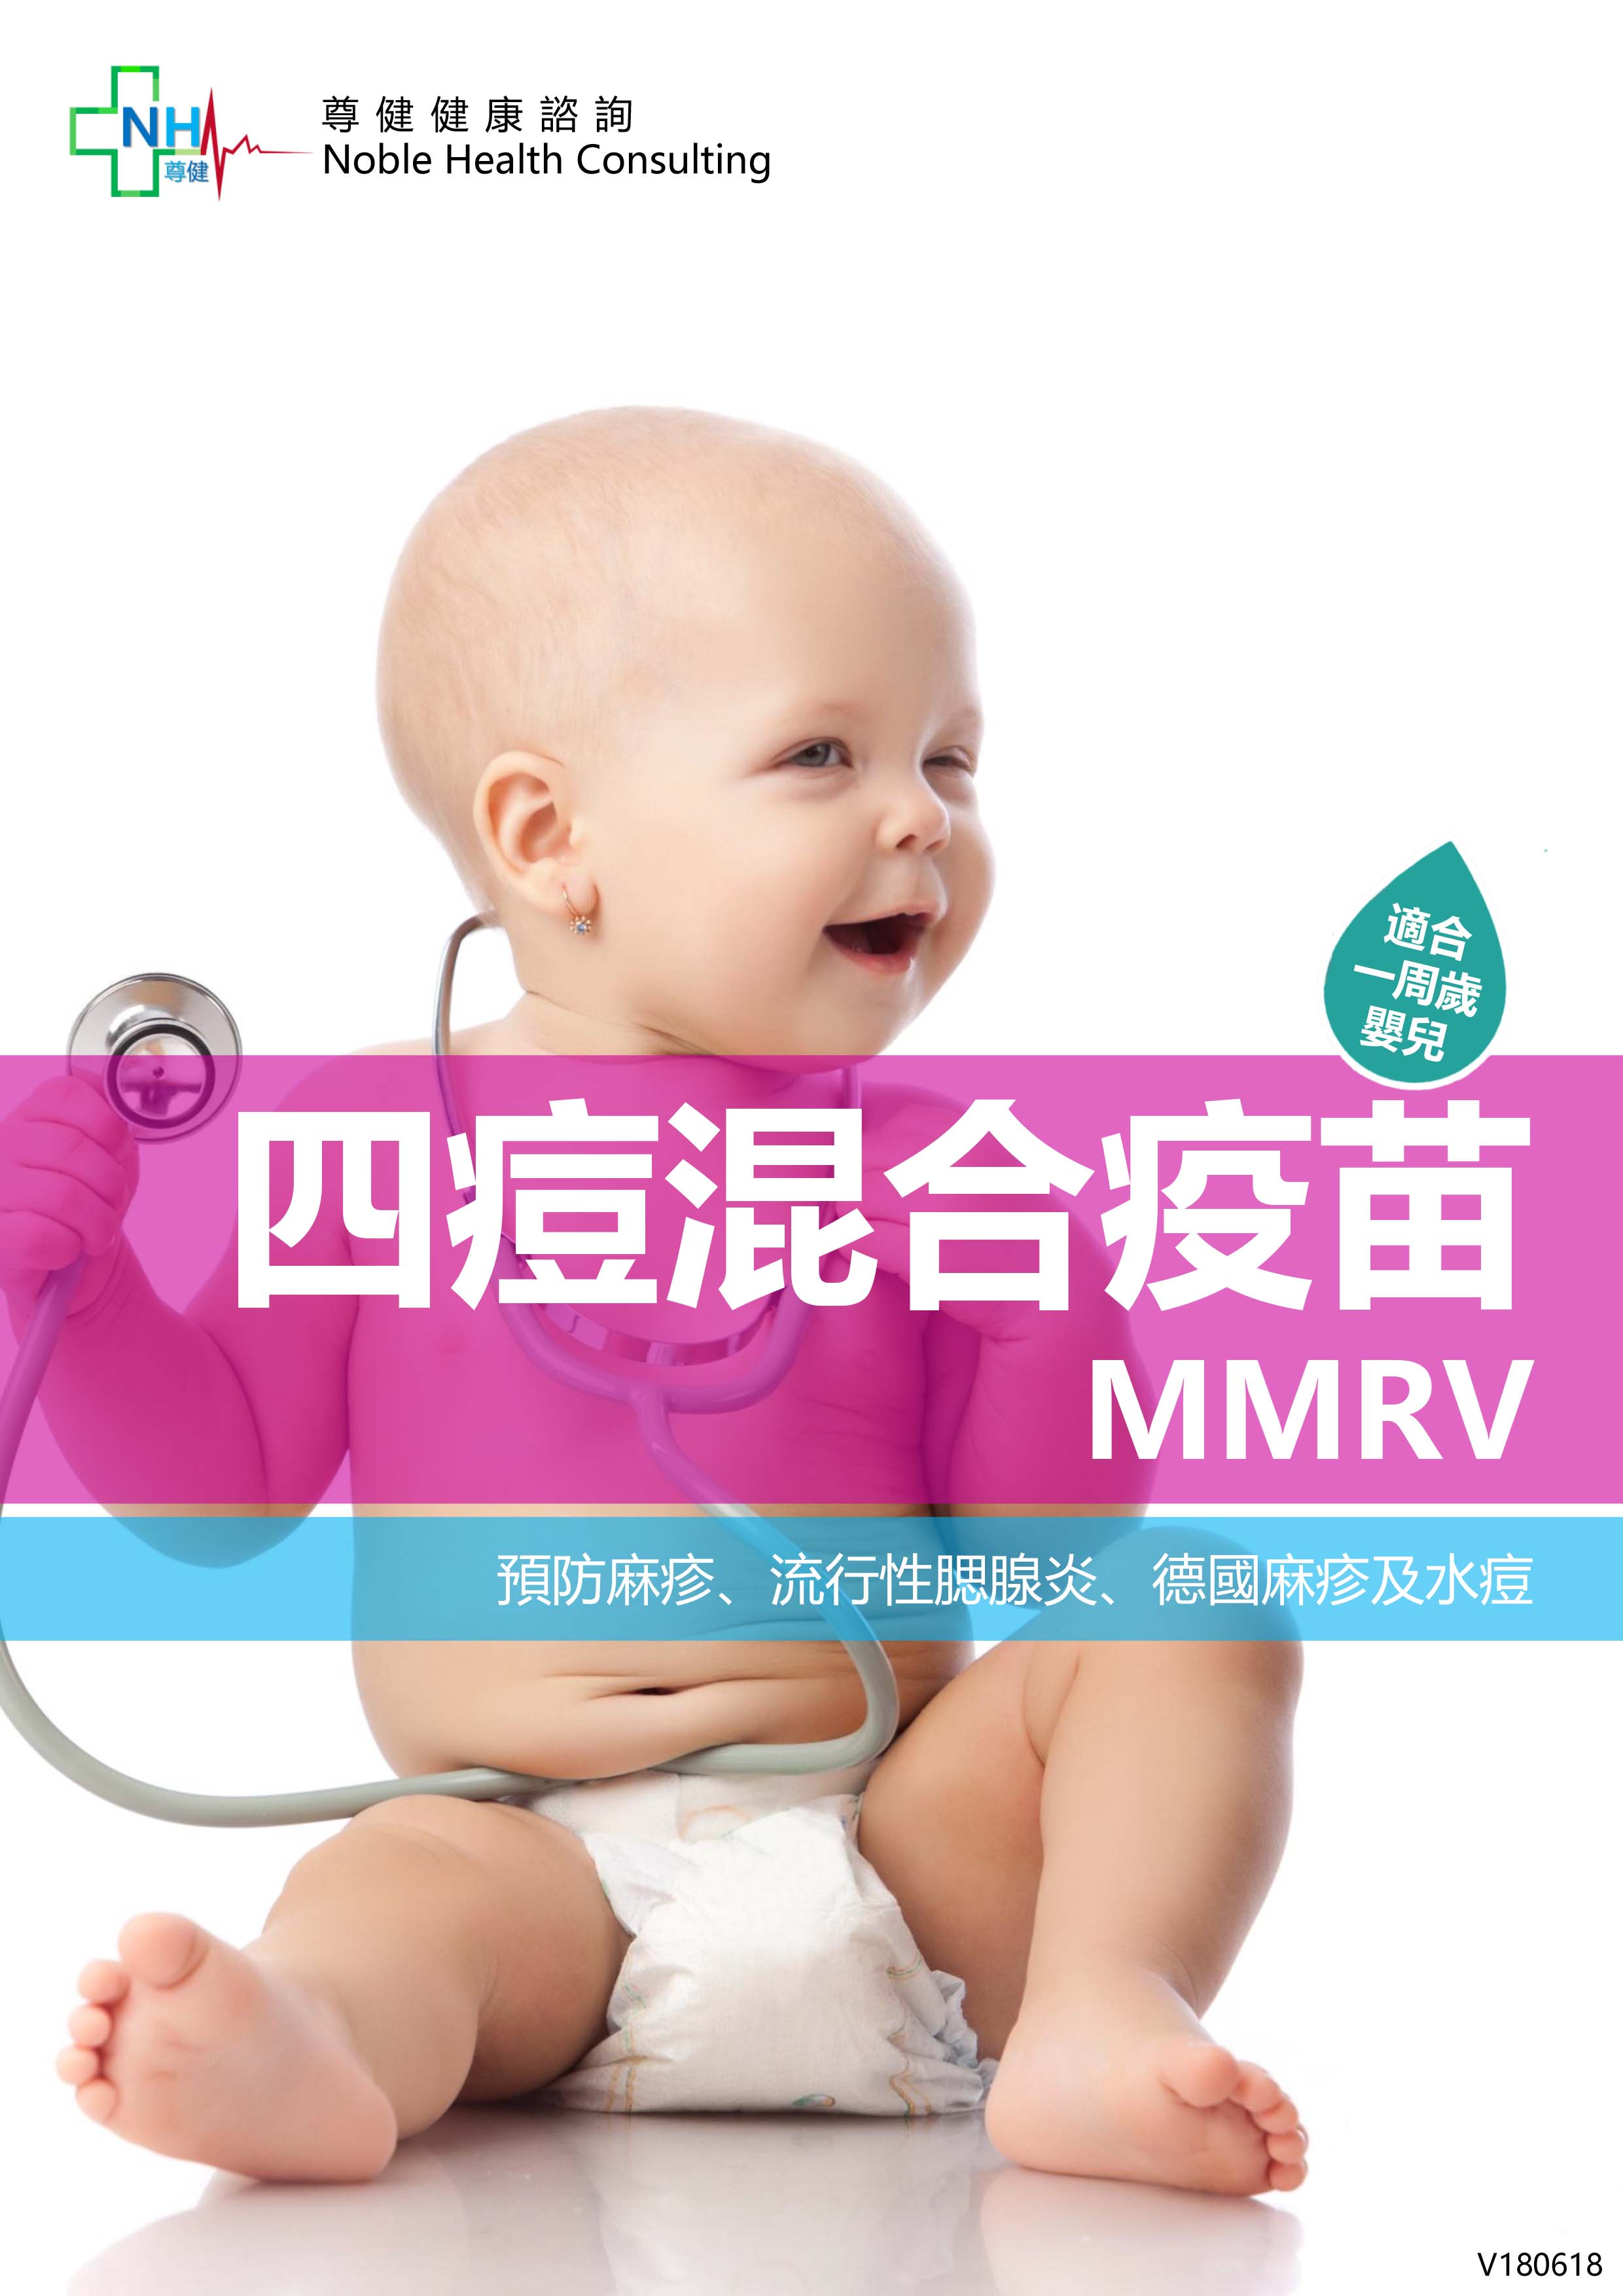 3i-baby-mmrv-vaccine-1.jpg